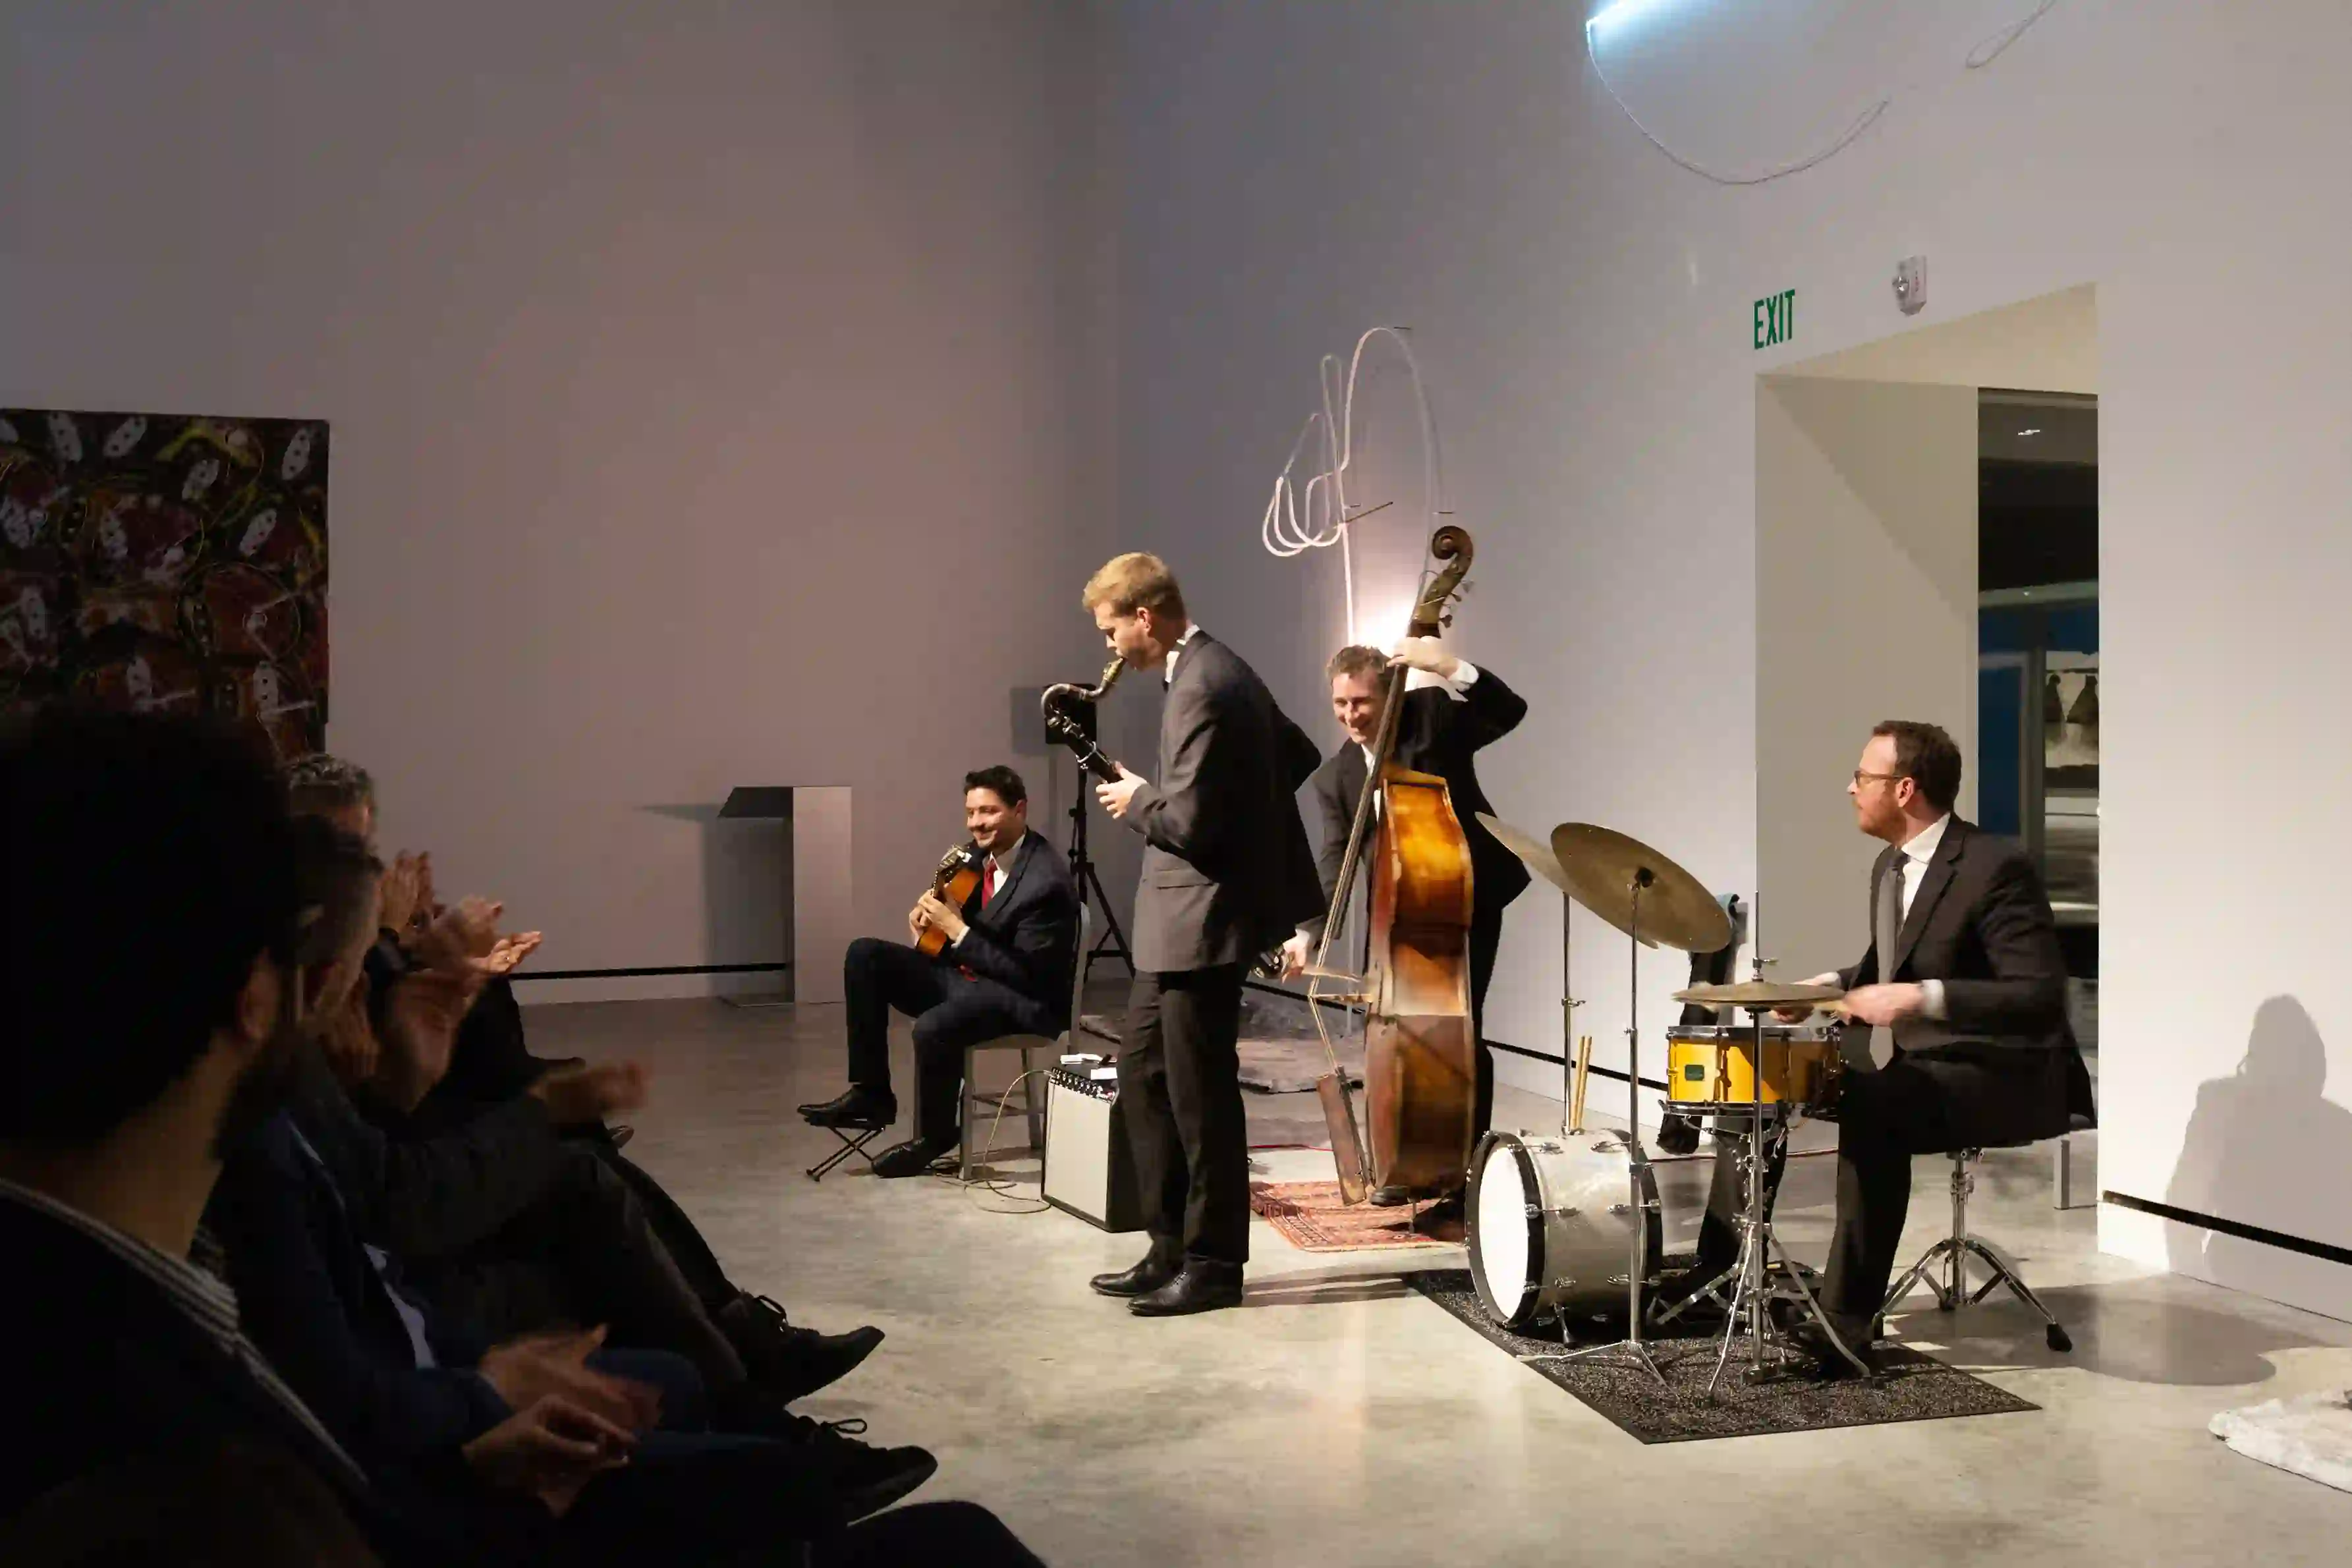 The Pasquale Grasso Quartet at Magazzino Italian Art